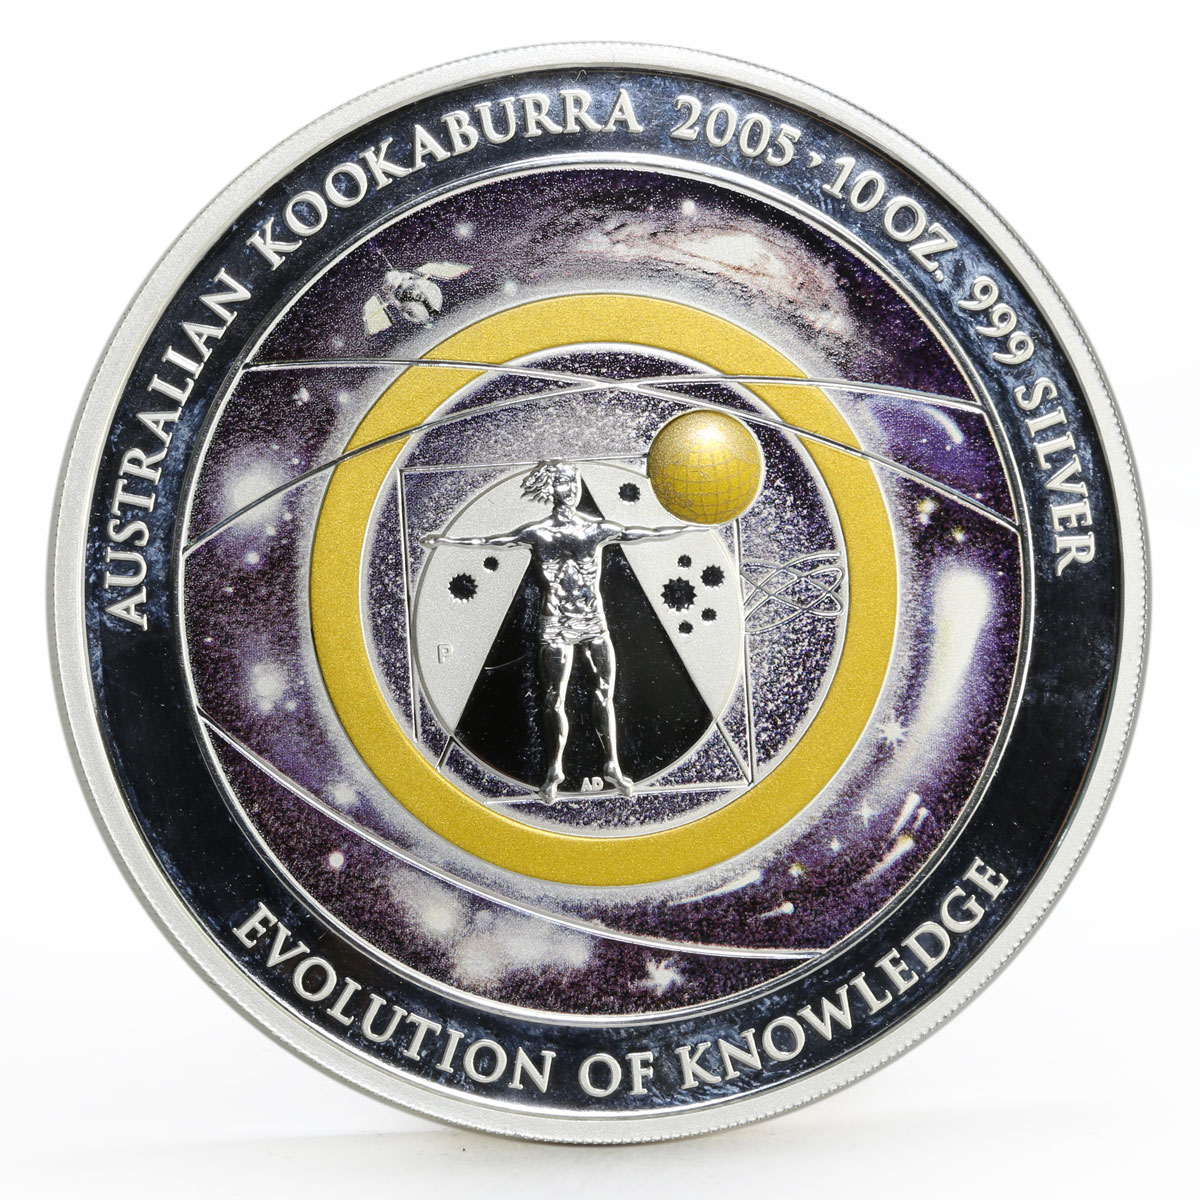 Australia 10 dollars Kookaburra Evolution of Knowledge proof silver coin 2005